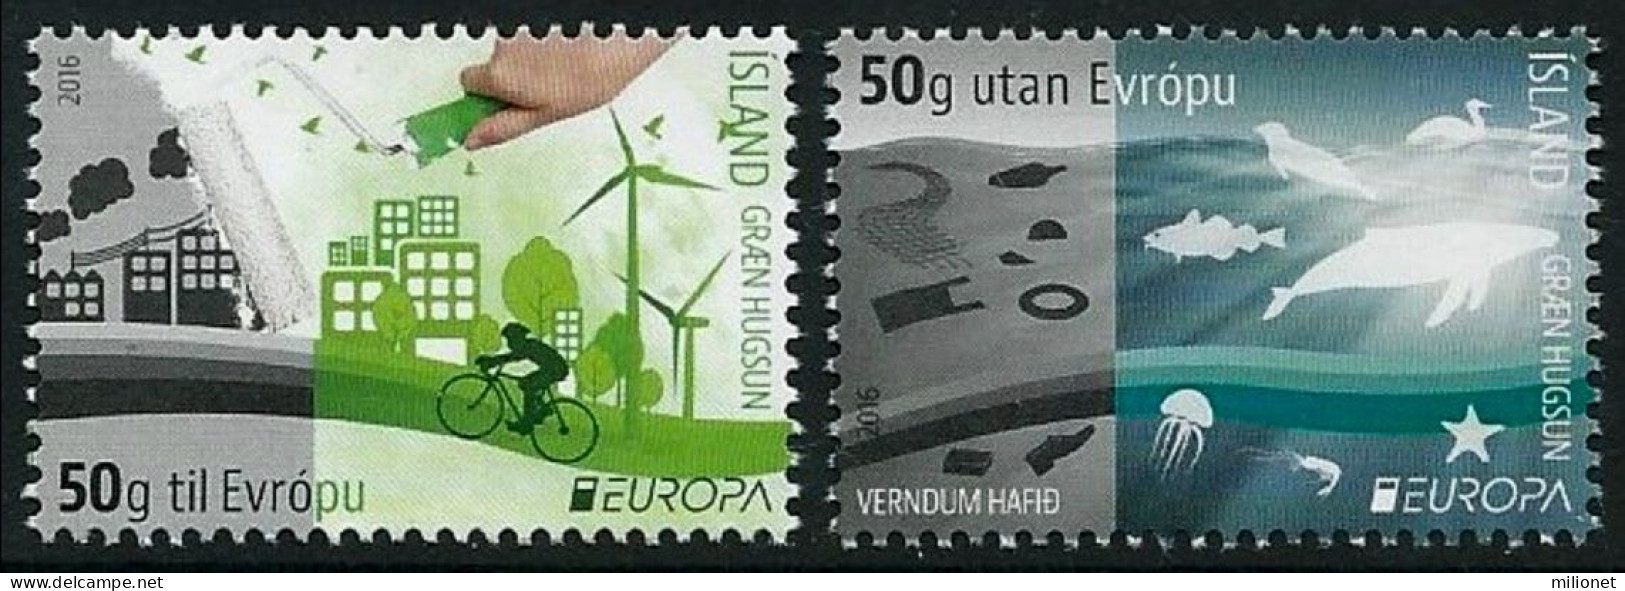 SALE!!! Iceland Islandia Islande Island 2016 EUROPA Think Green 2 Stamps From Sheetlets MNH ** - 2016